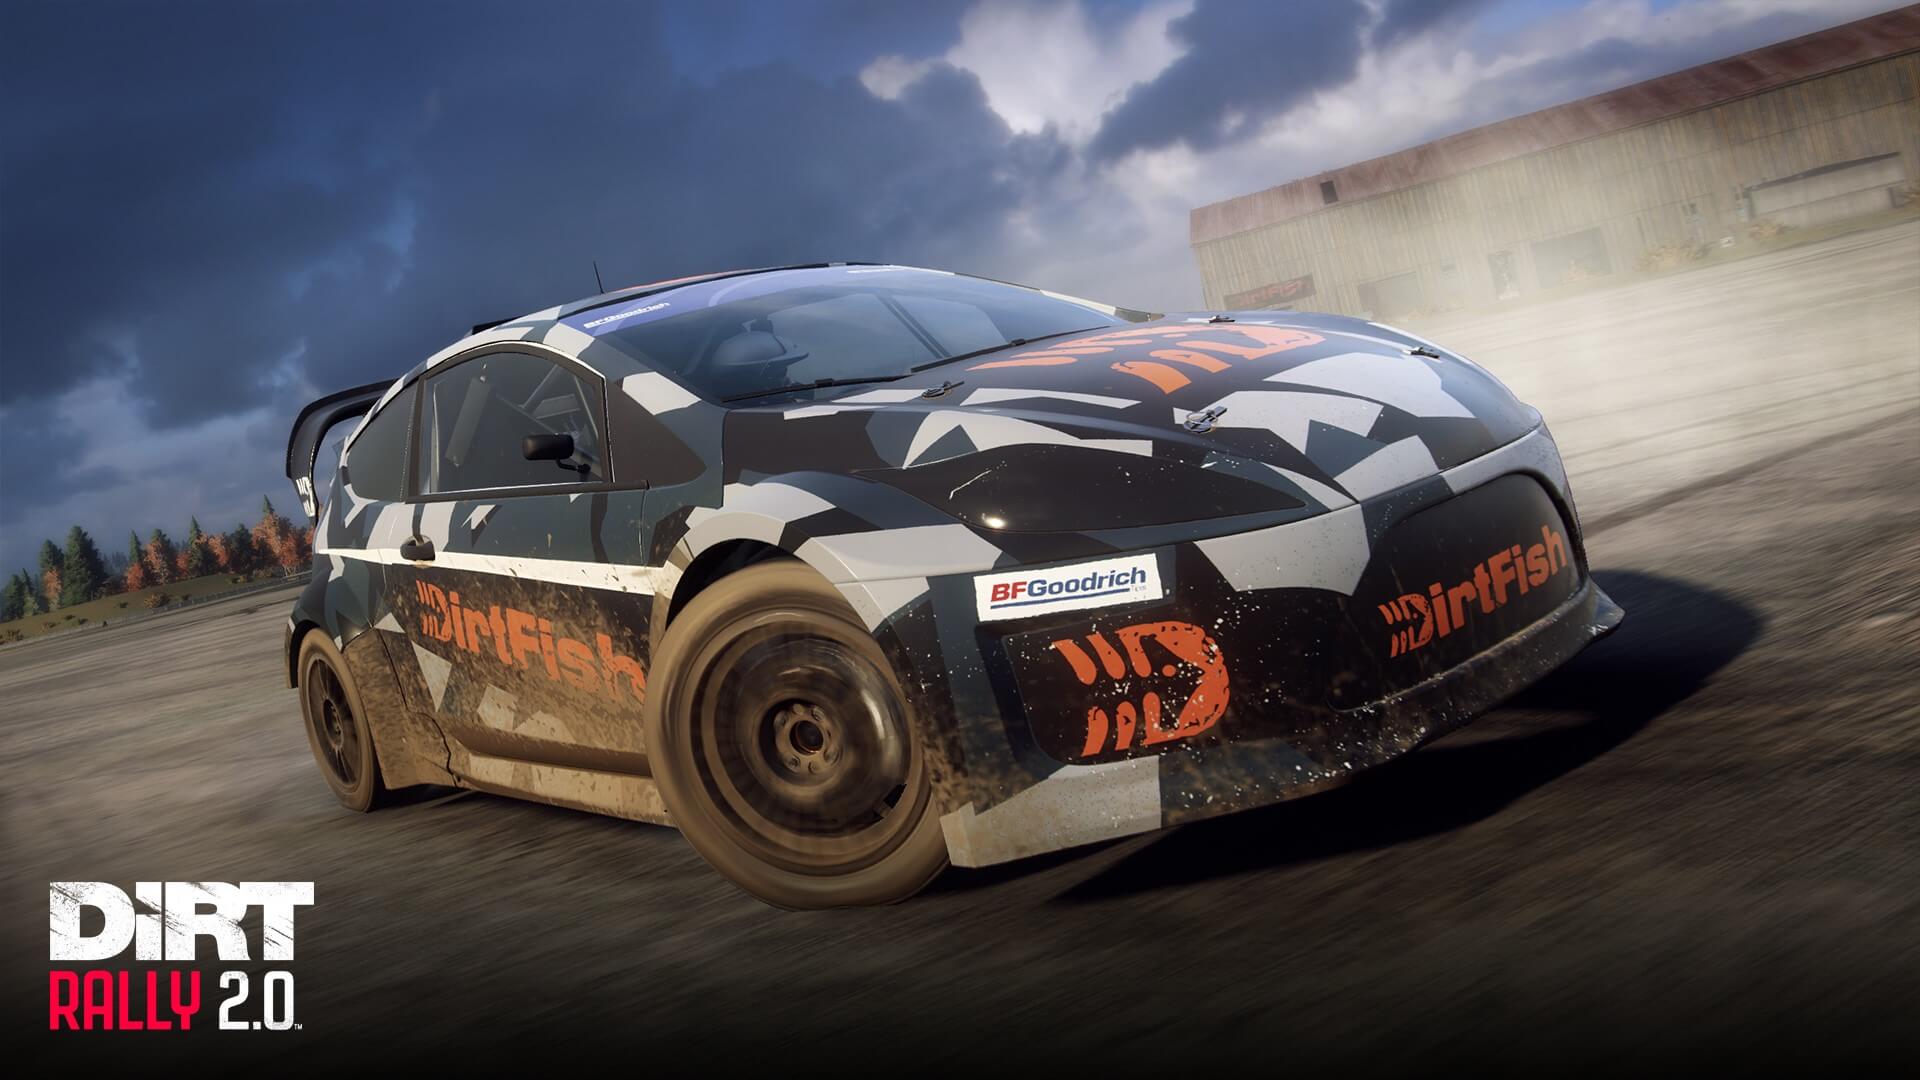 Vr rally. Dirt 2 ралли. Dirt Rally 2.0 VR. Dirt Rally 4. Dirt Rally VR 2.